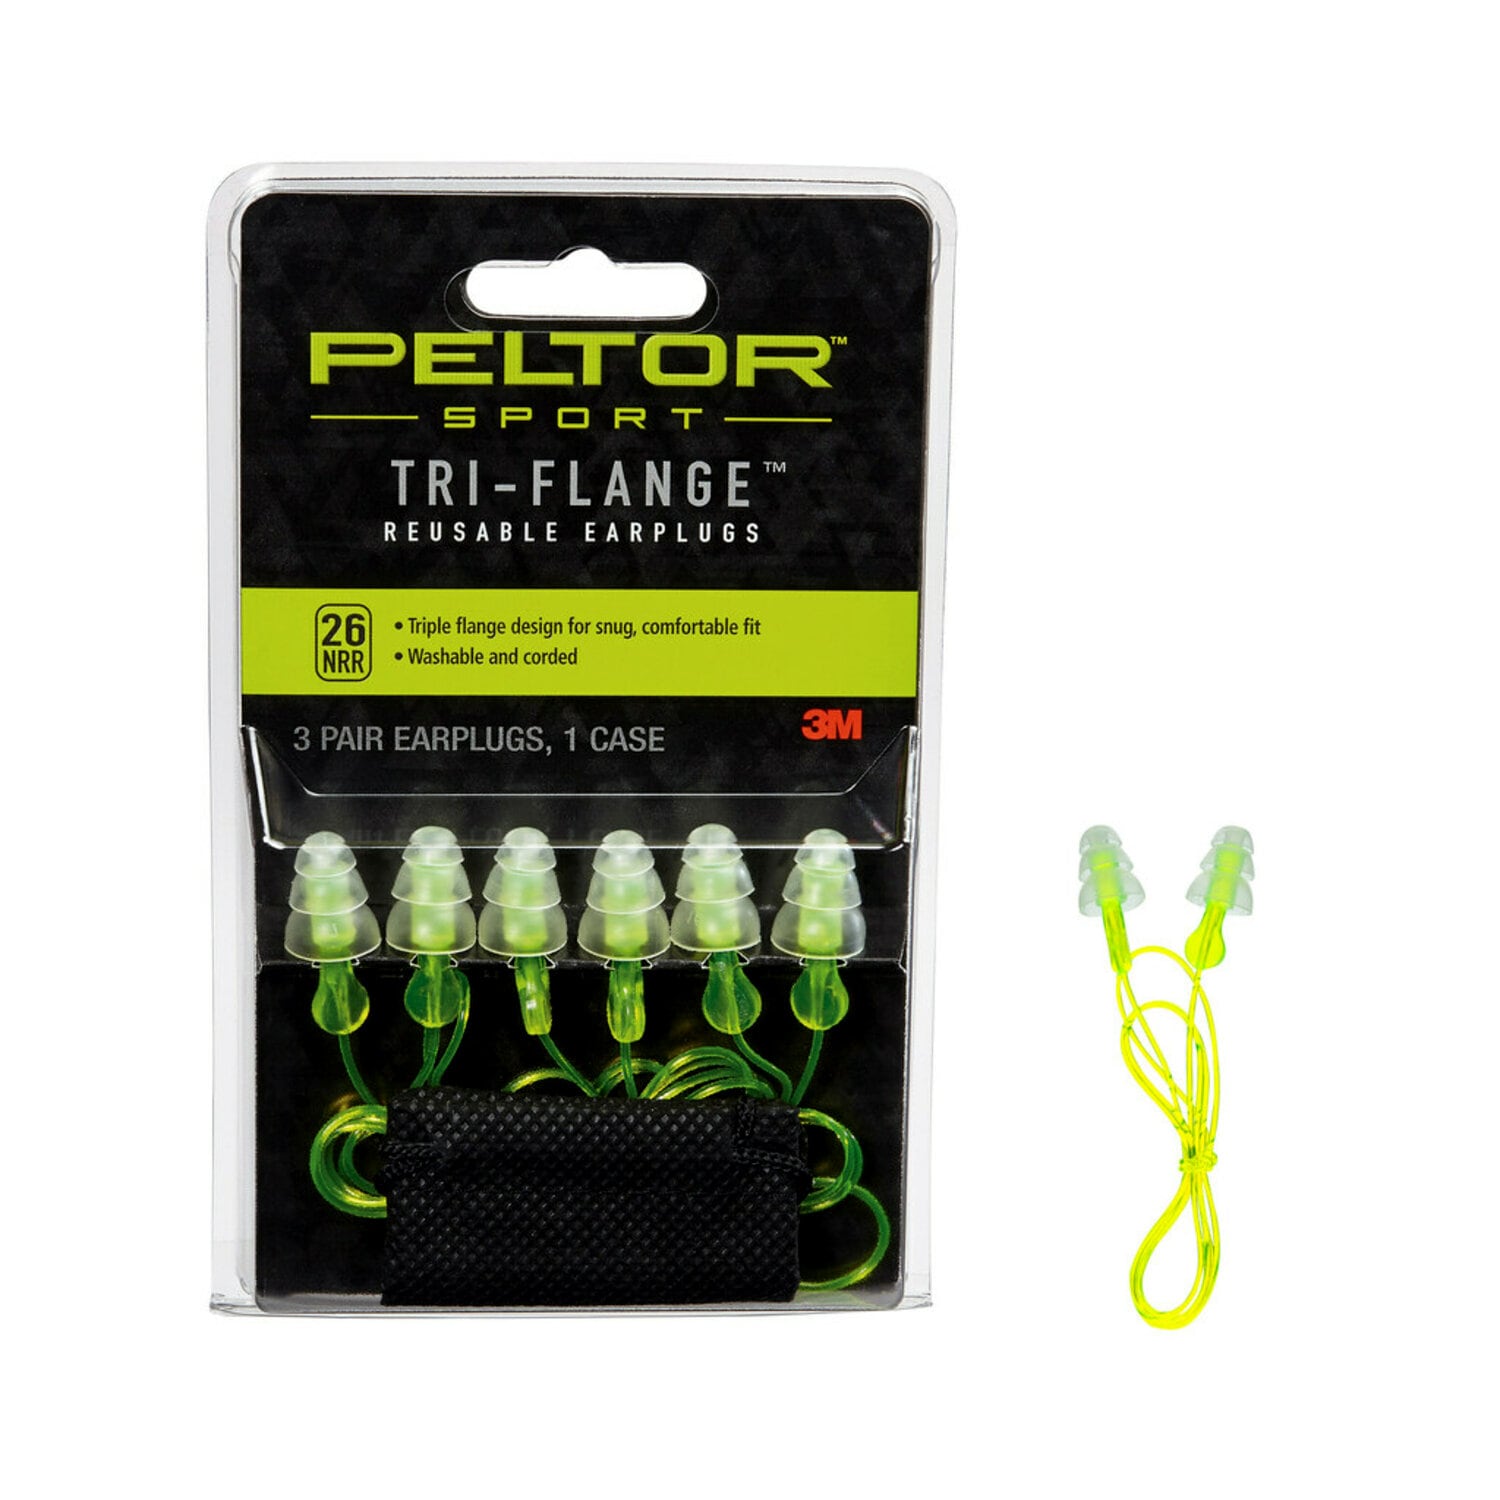 7010336385 - Peltor Sport Tri-Flange Corded Reusable Earplugs 97317-10C, 3 Pair Pack Neon Yellow